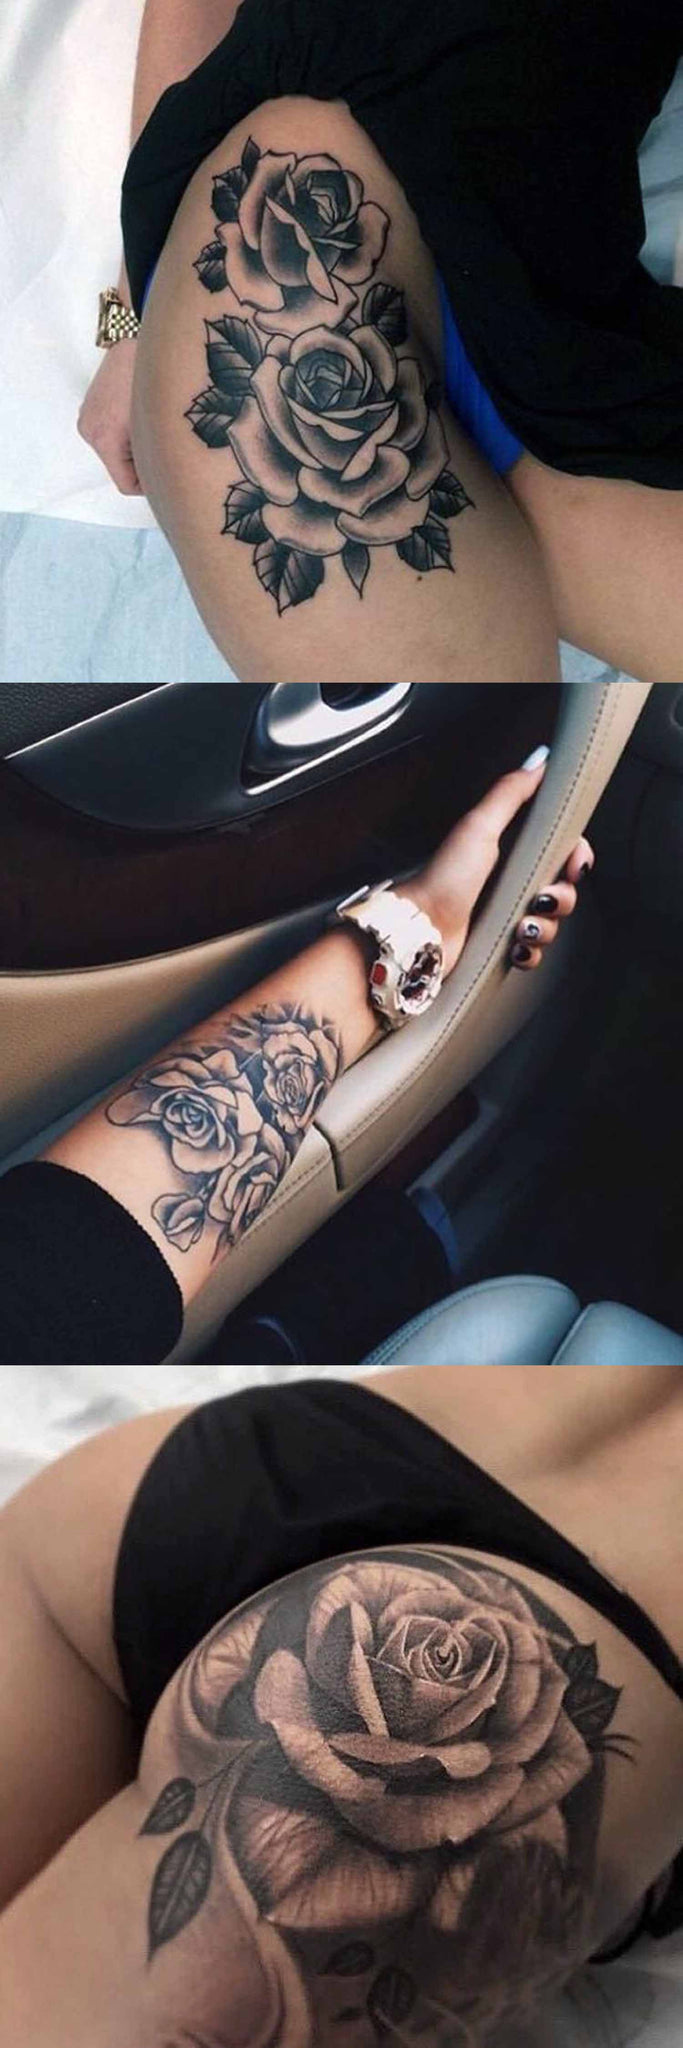 Realistic Black Rose Flower Floral Thigh Leg Arm Wrist Bum Tattoo Ideas for Women at MyBodiArt.com